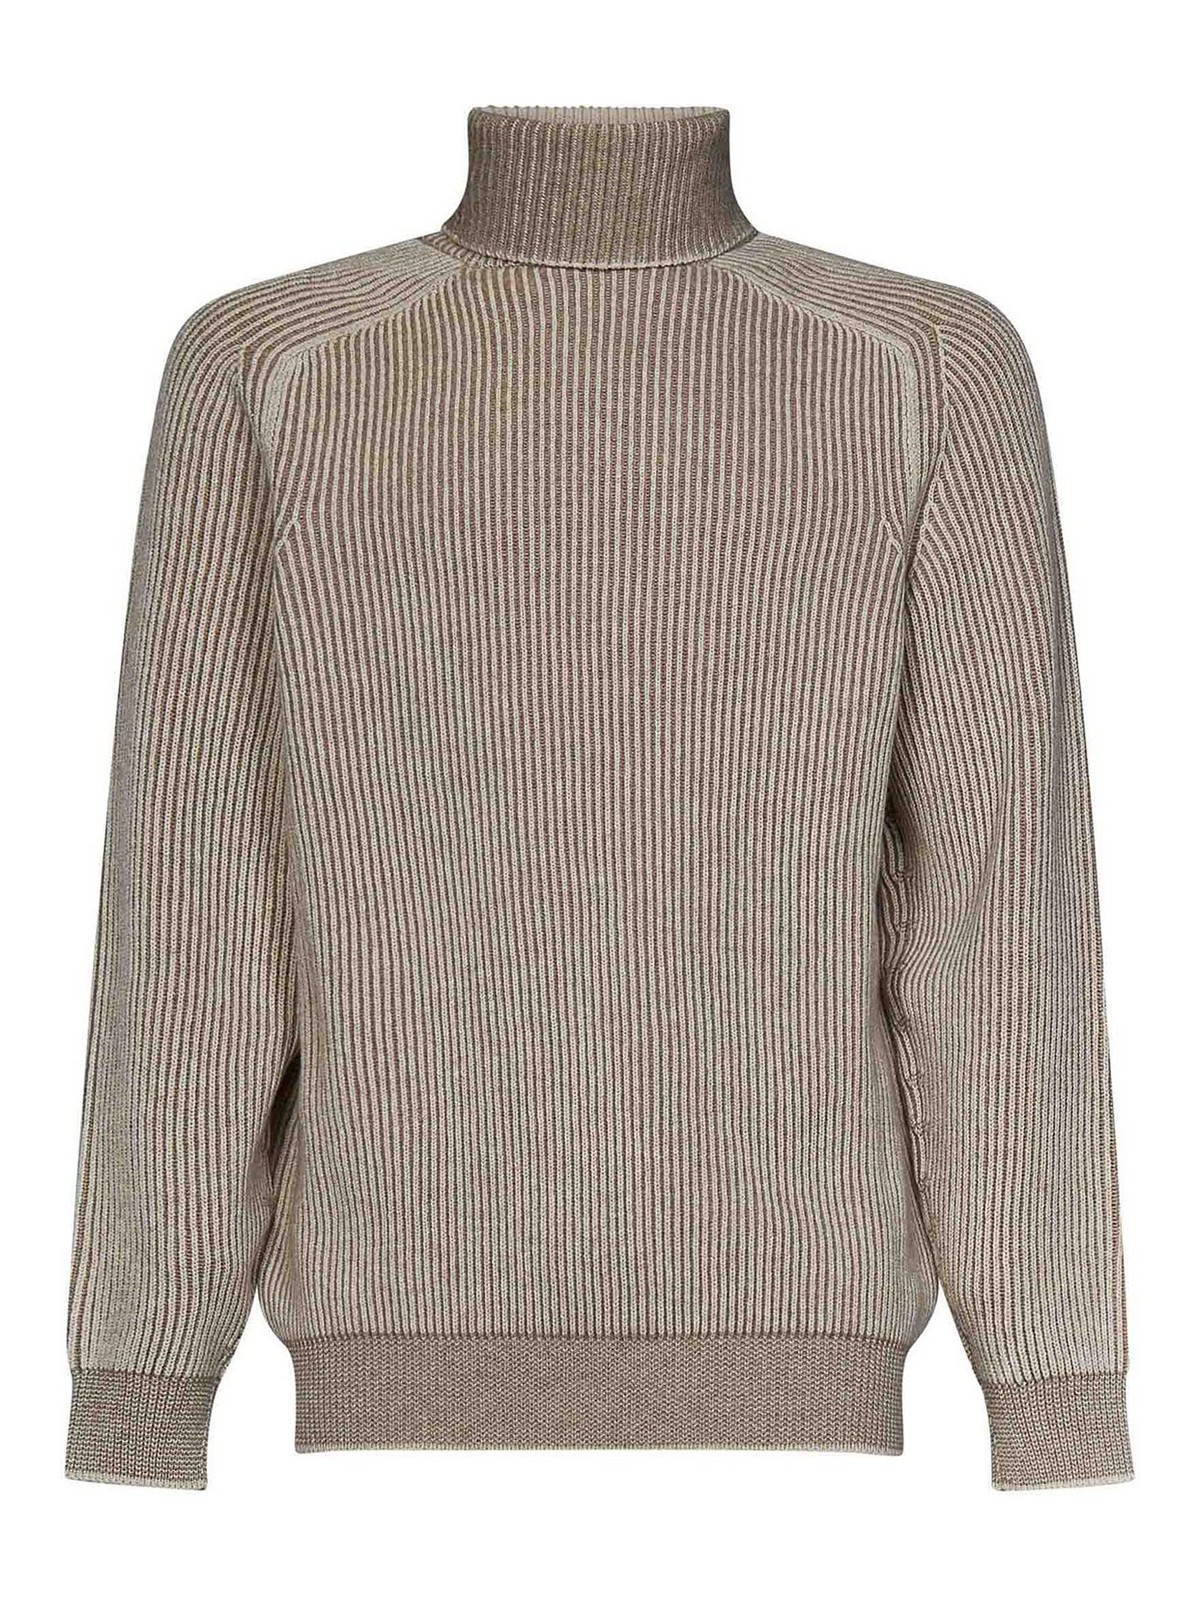 Sease Beige Cashmere Turtleneck Sweater